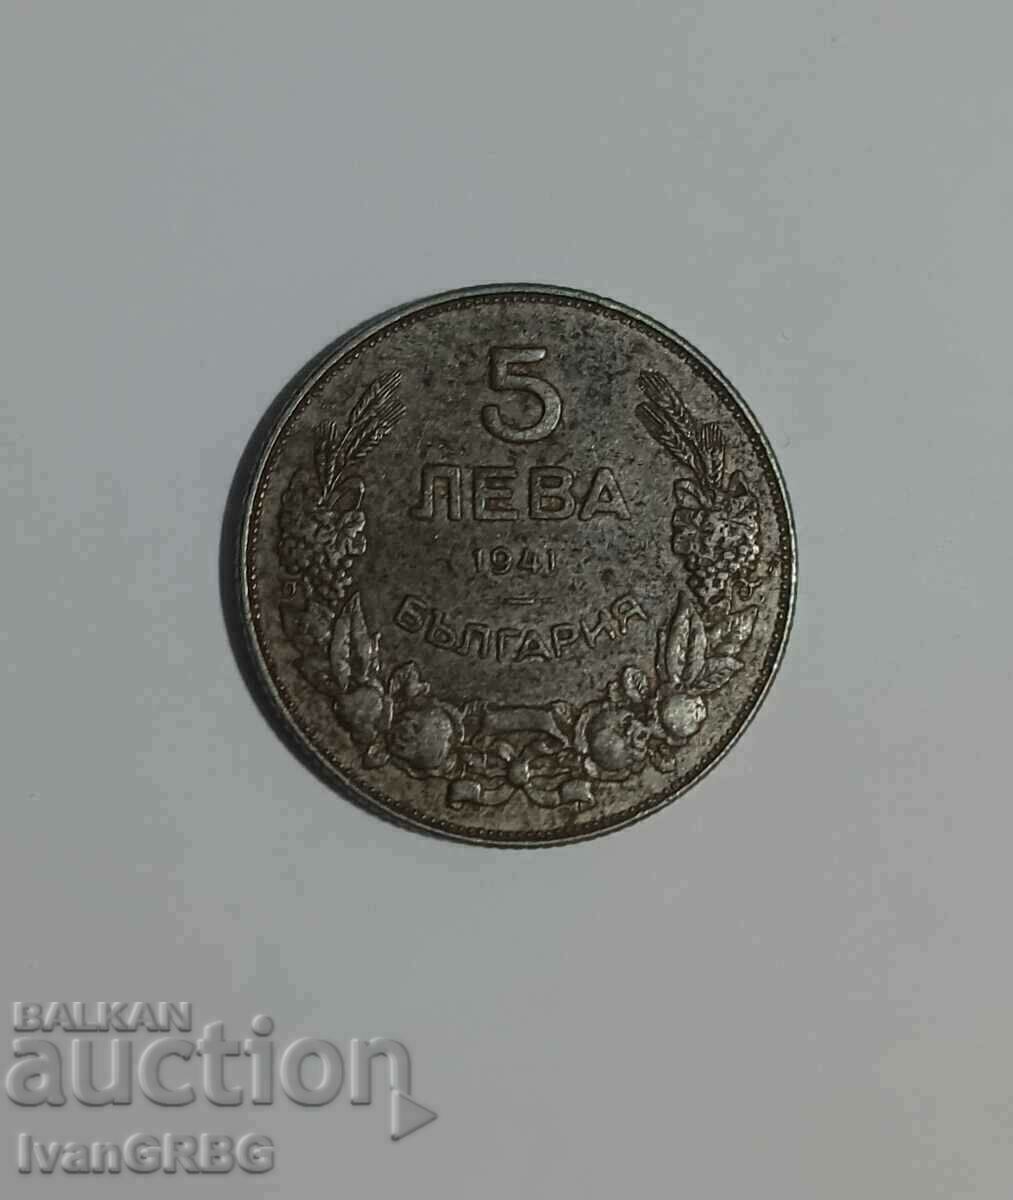 5 BGN 1941 Bulgaria IRON rare coin Kingdom of Bulgaria